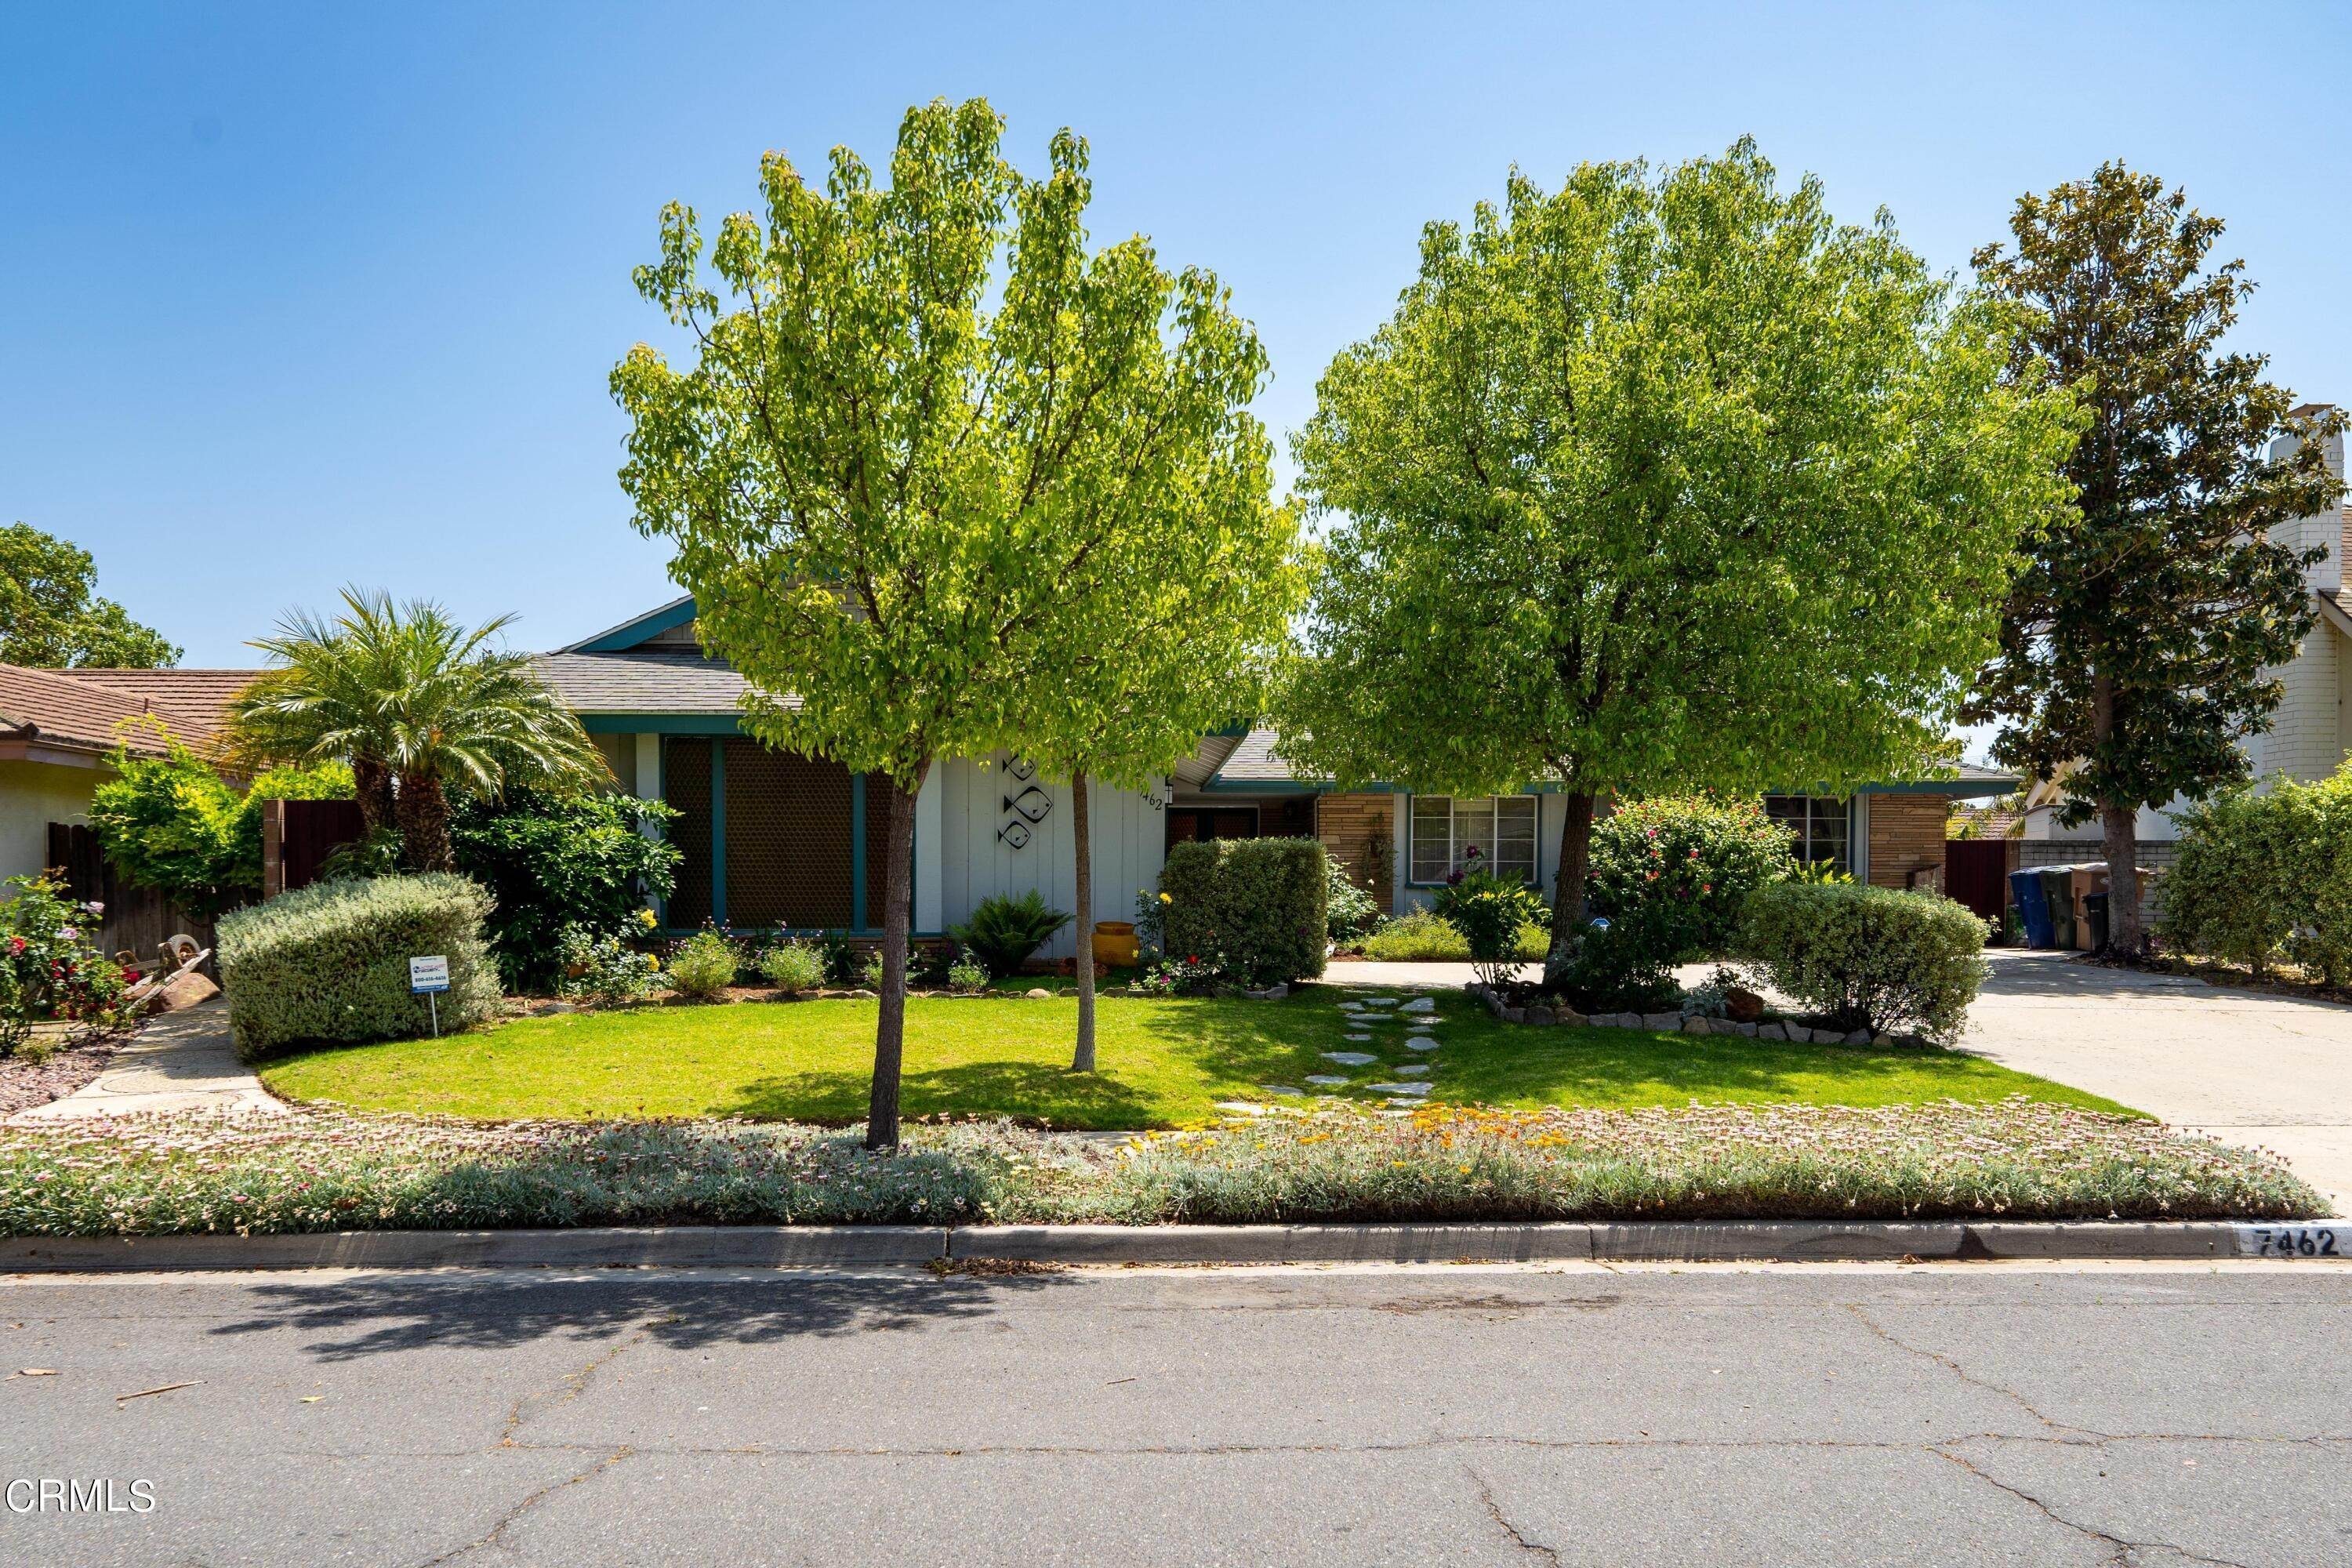 2. Single Family Homes for Sale at 7462 Jackson Street Ventura, California 93003 United States